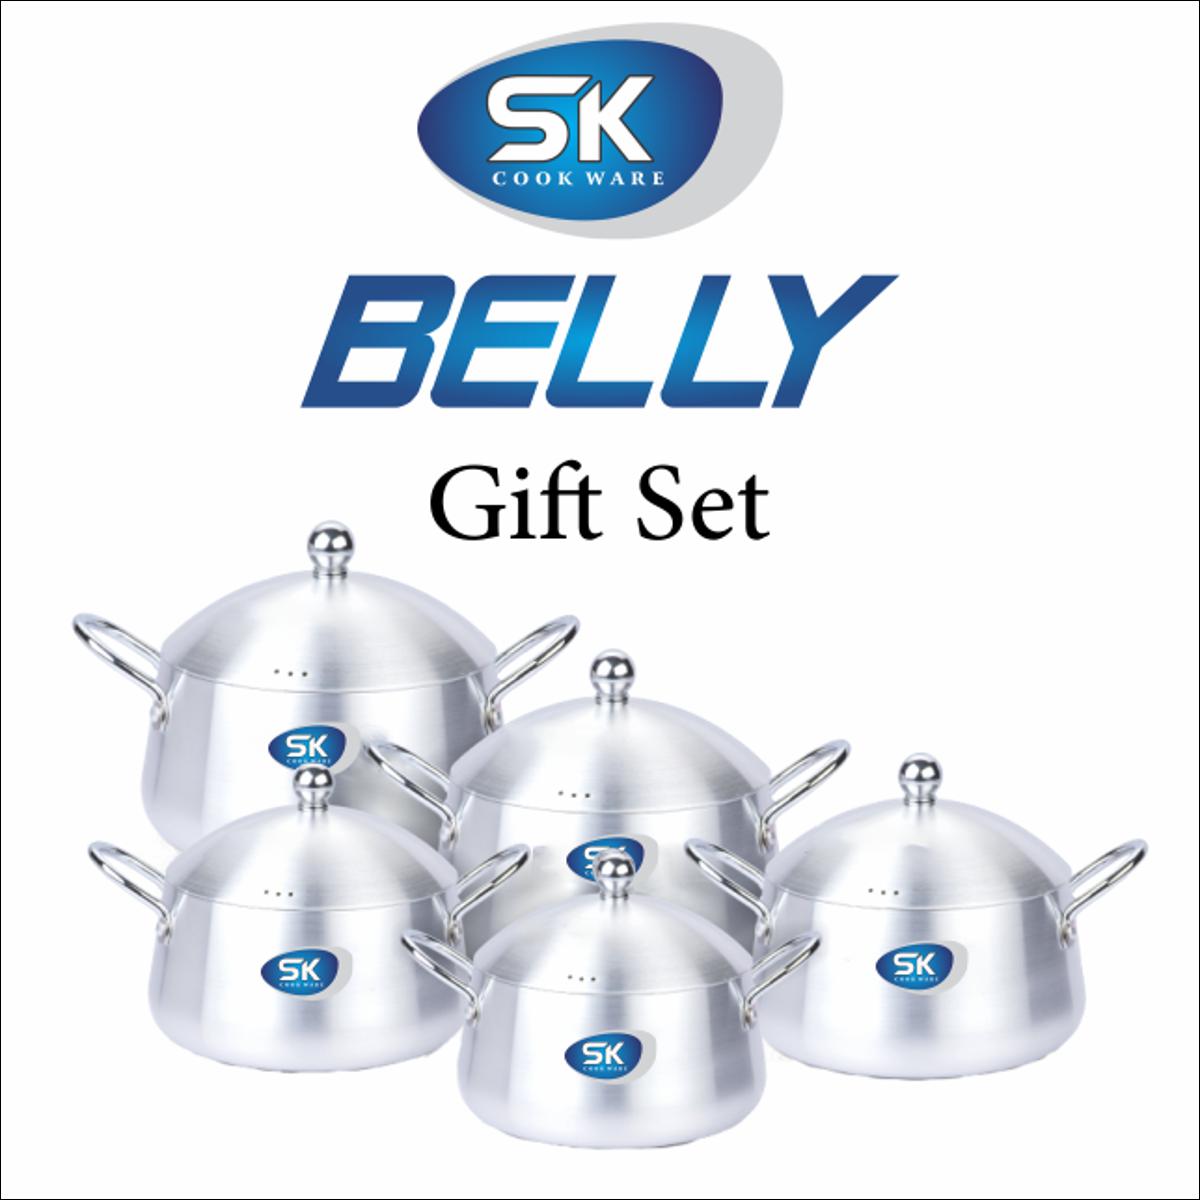 SK Belly Pot Casserole Cookware Set Price in Pakistan